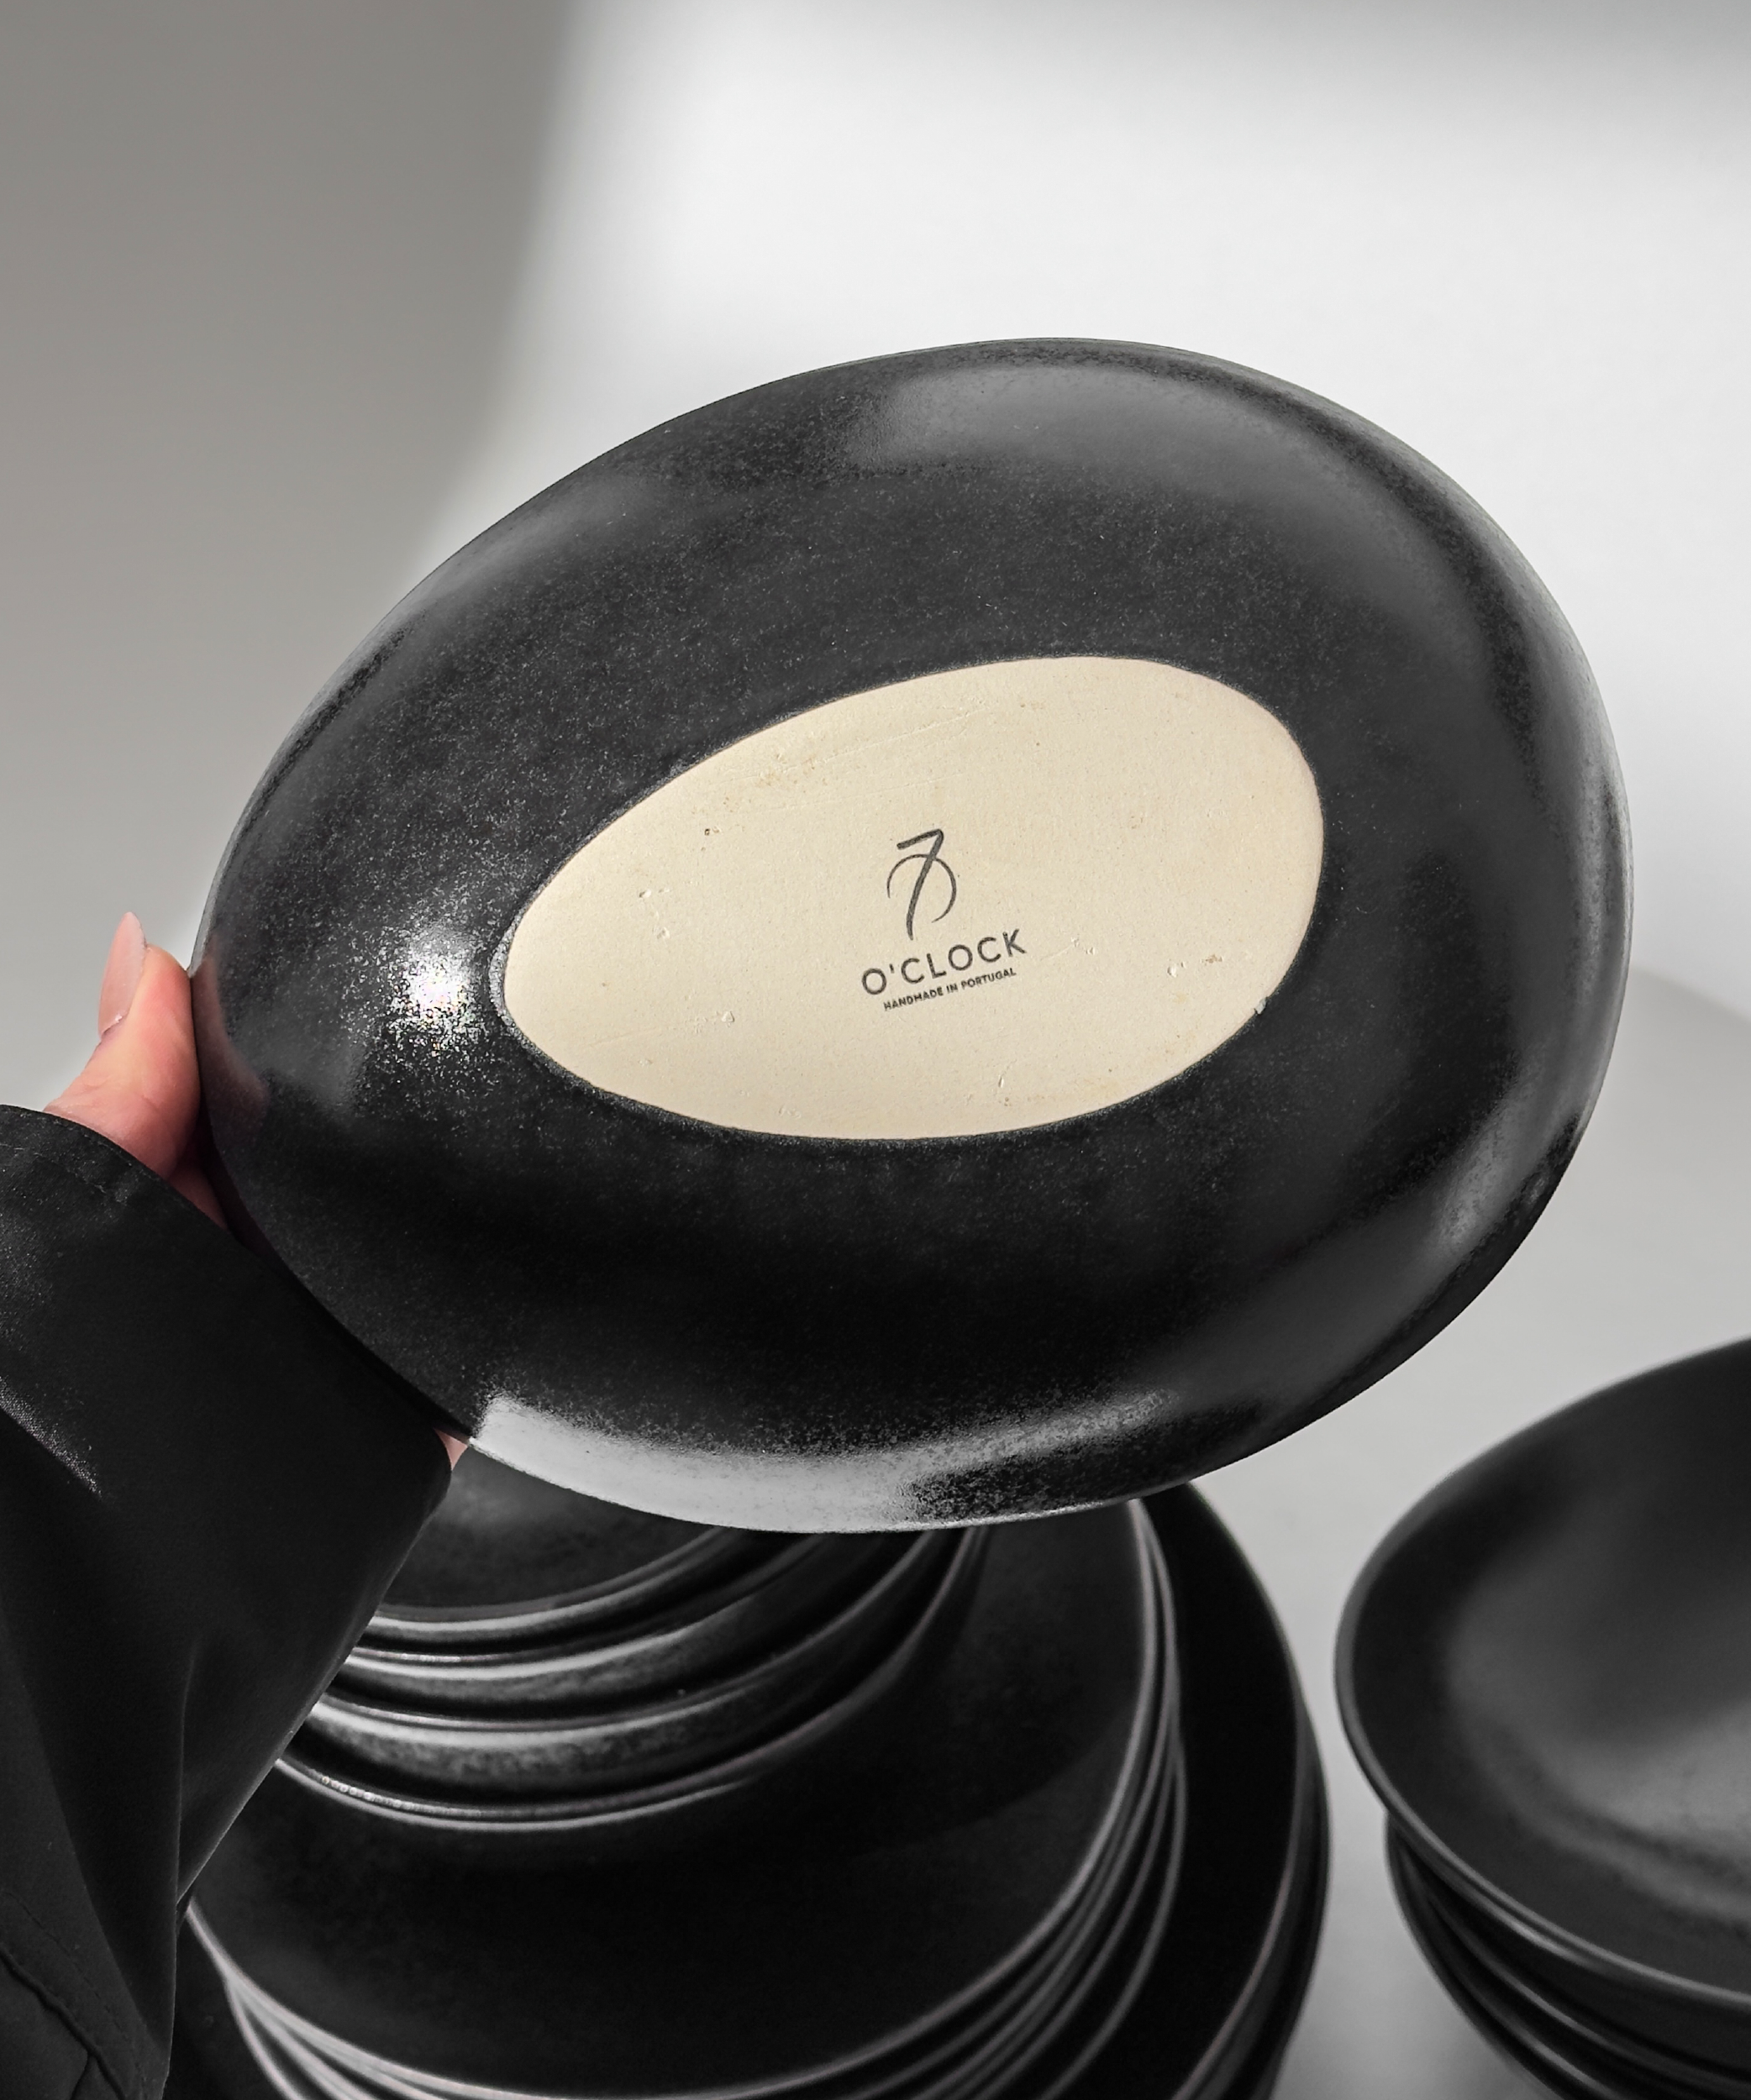 Handgefertigtes schwarzes Keramik Geschirr-Set in organischer Form